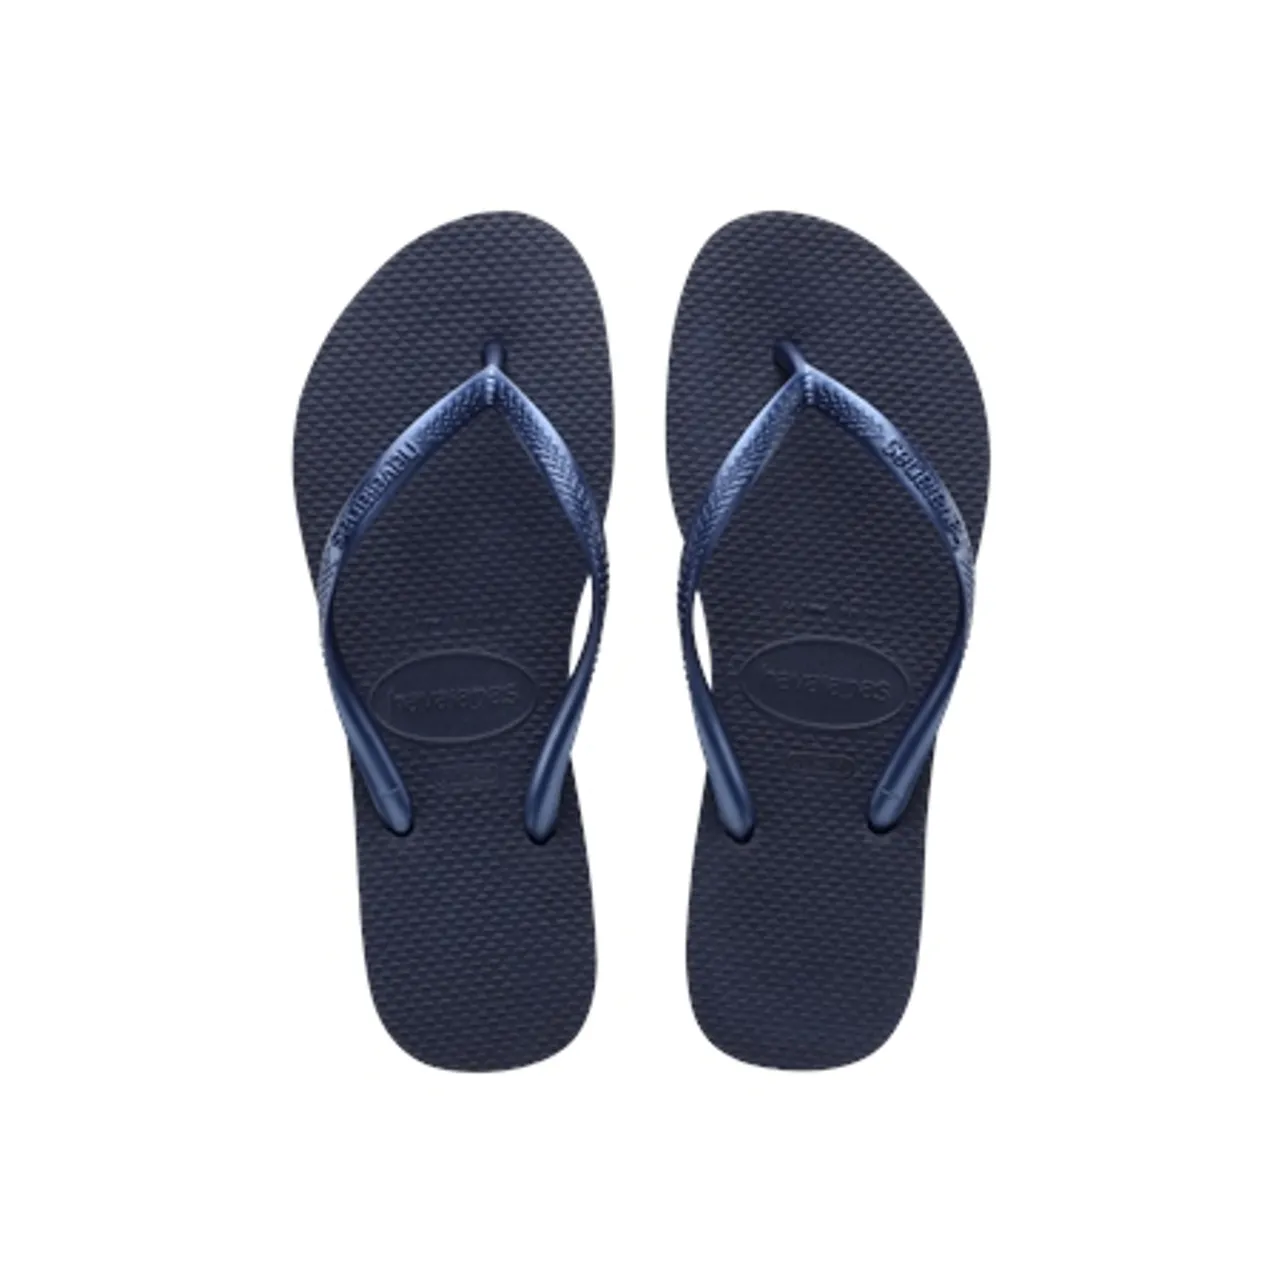 Havaianas Slim Flip Flops - Navy Blue - UK 5 (EU 37/38)